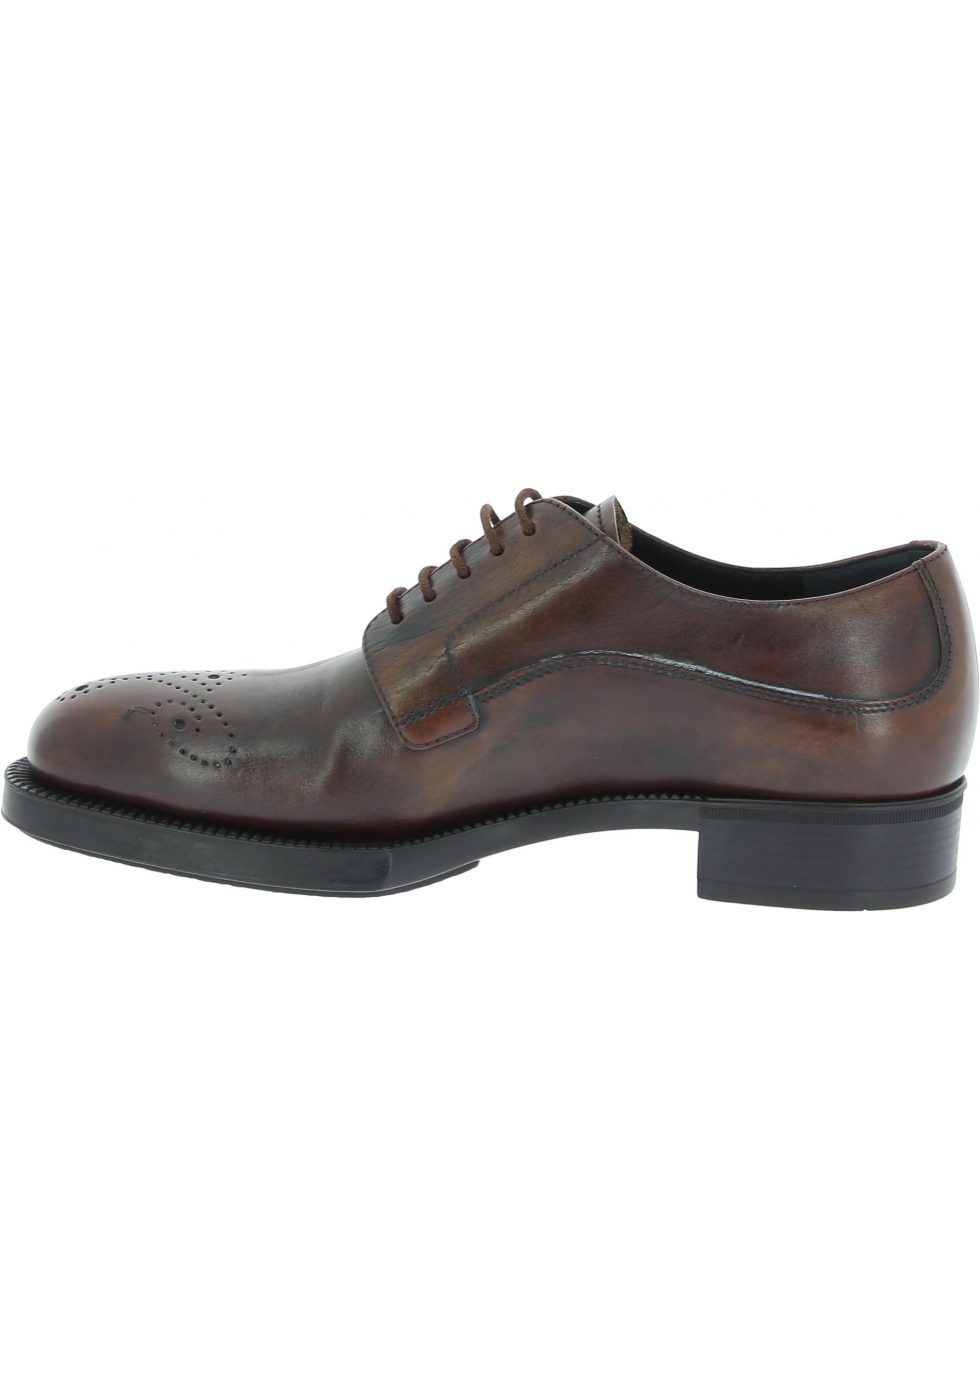 Prada Women fashion brogues Oxford laced-up shoes in dark brown calf ...